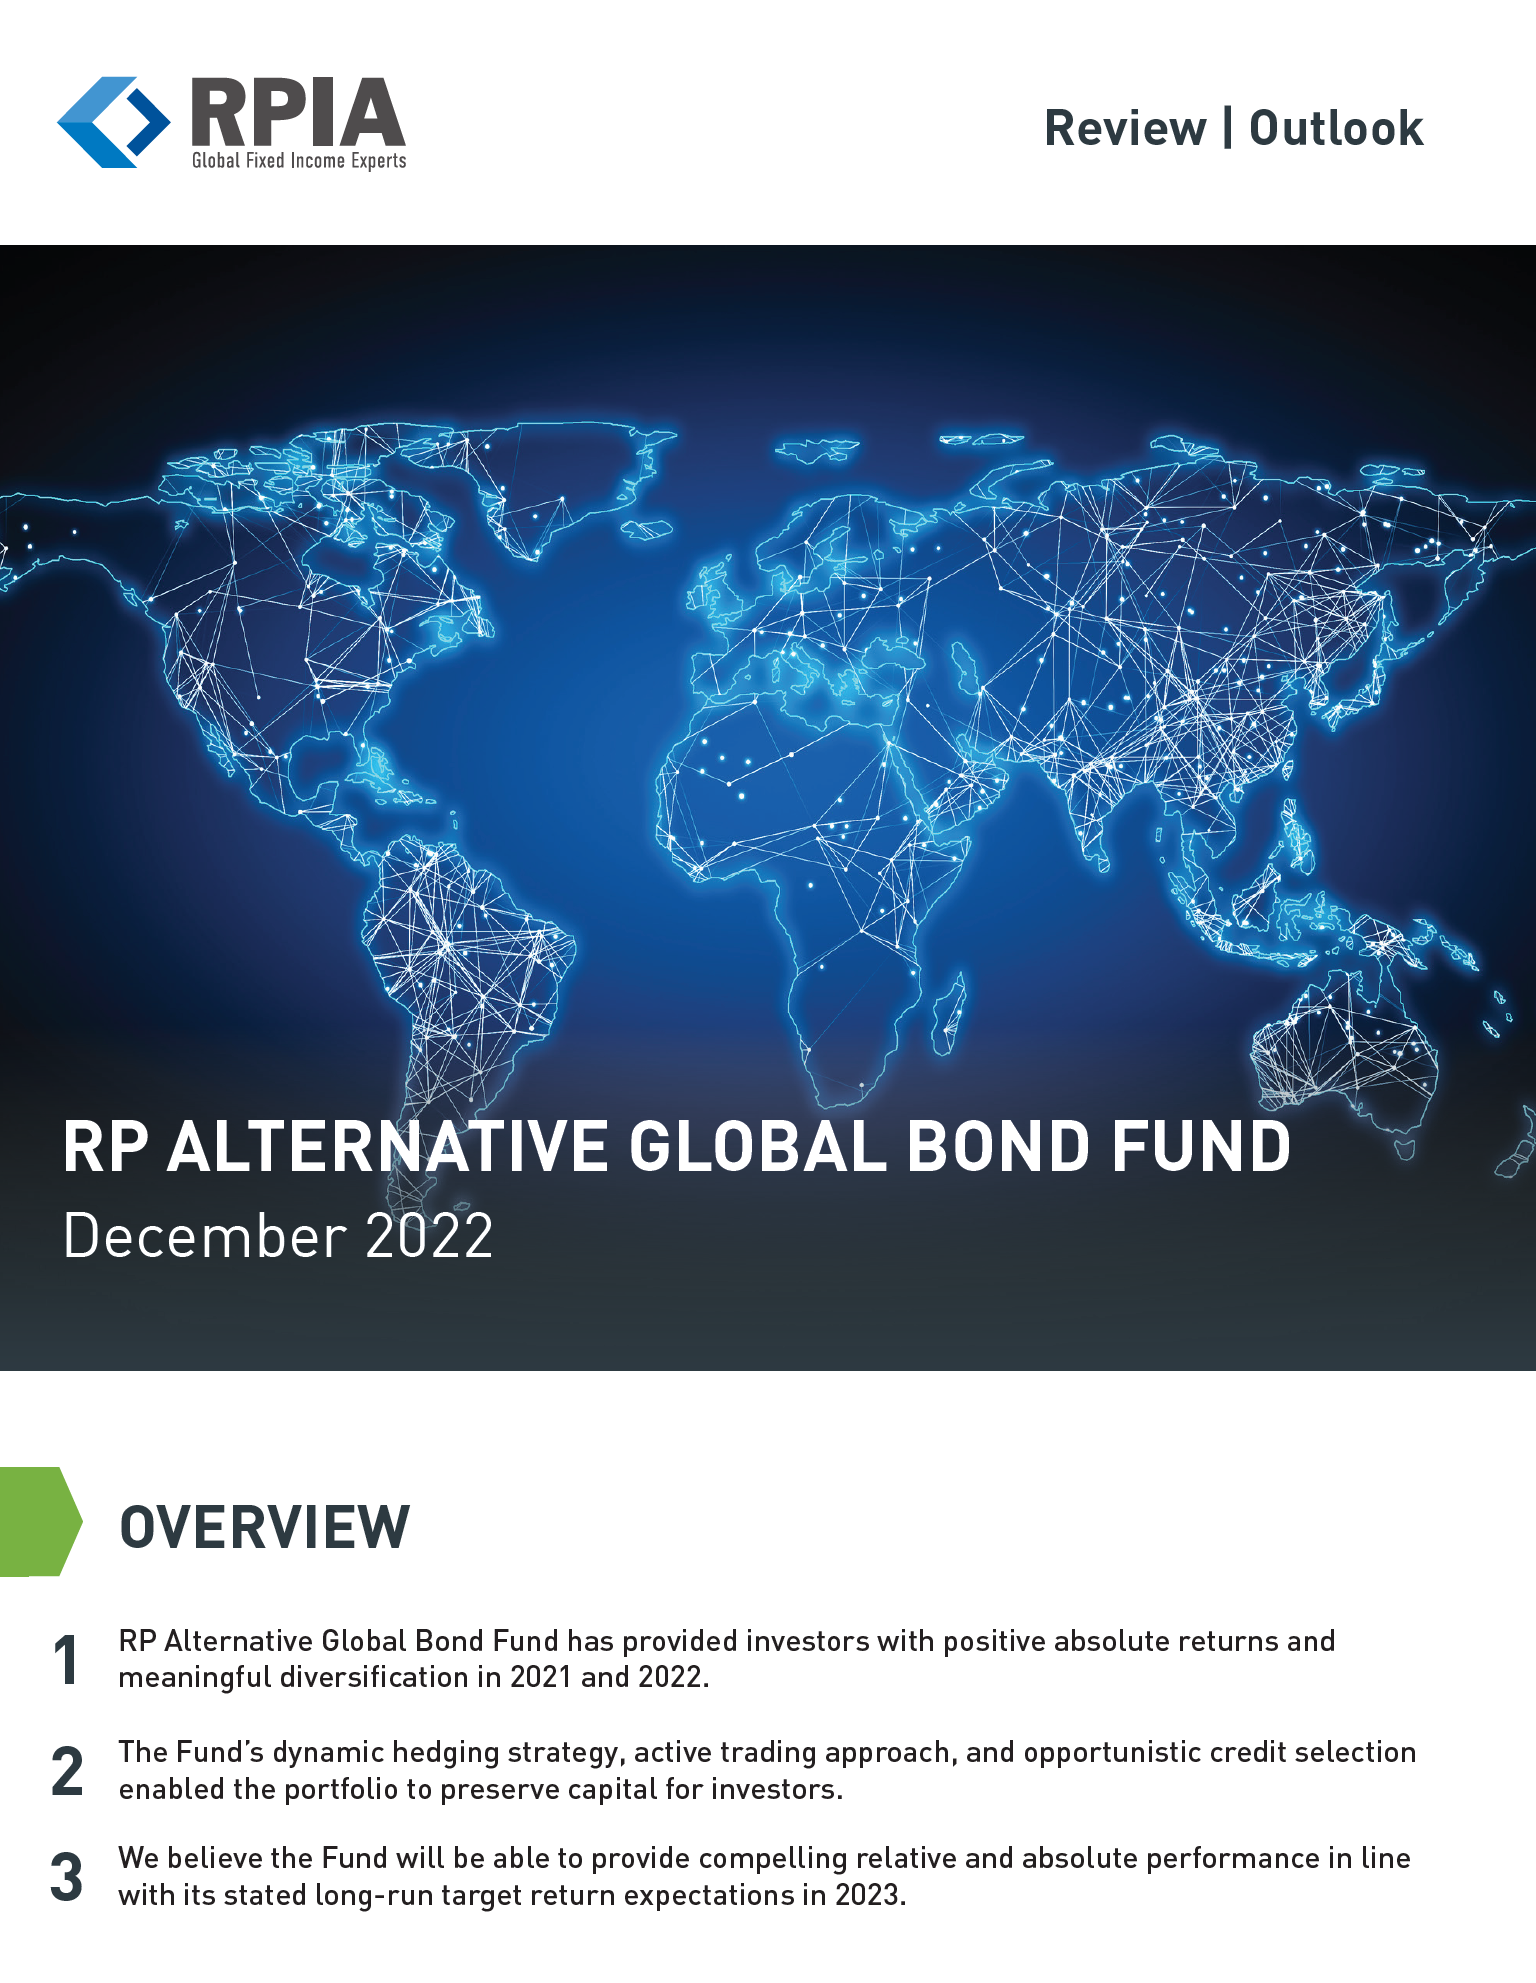 RP Alternative Global Bond Fund